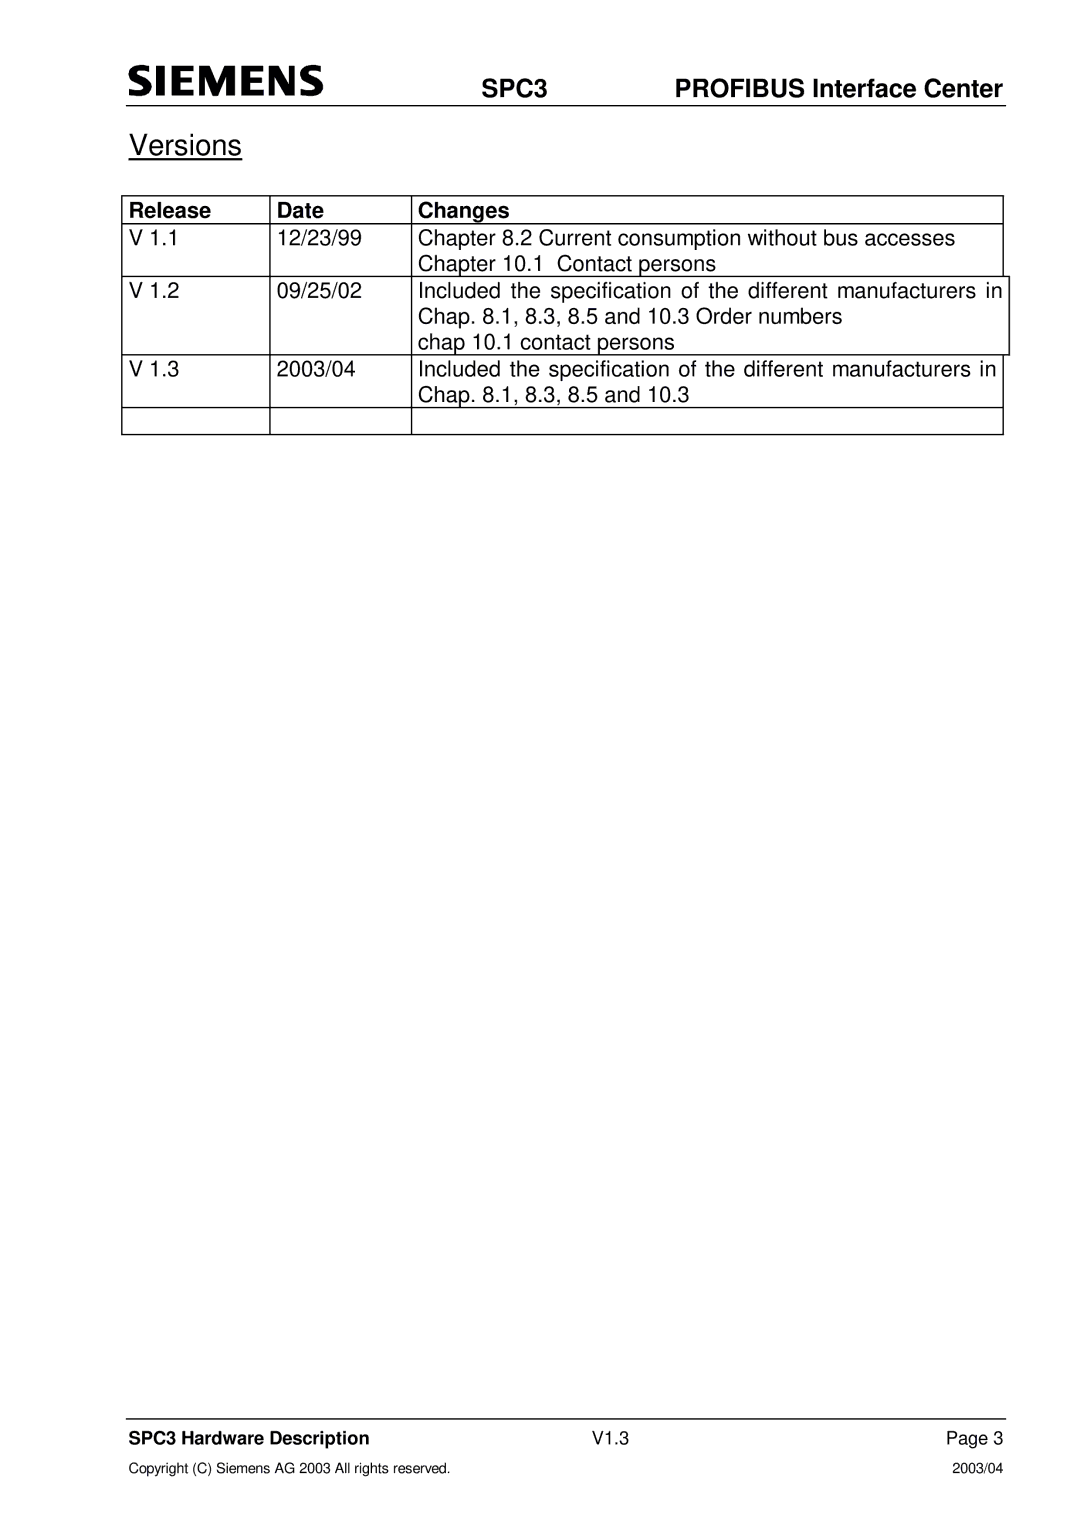 Siemens SPC3 manual Versions, Release Date Changes 